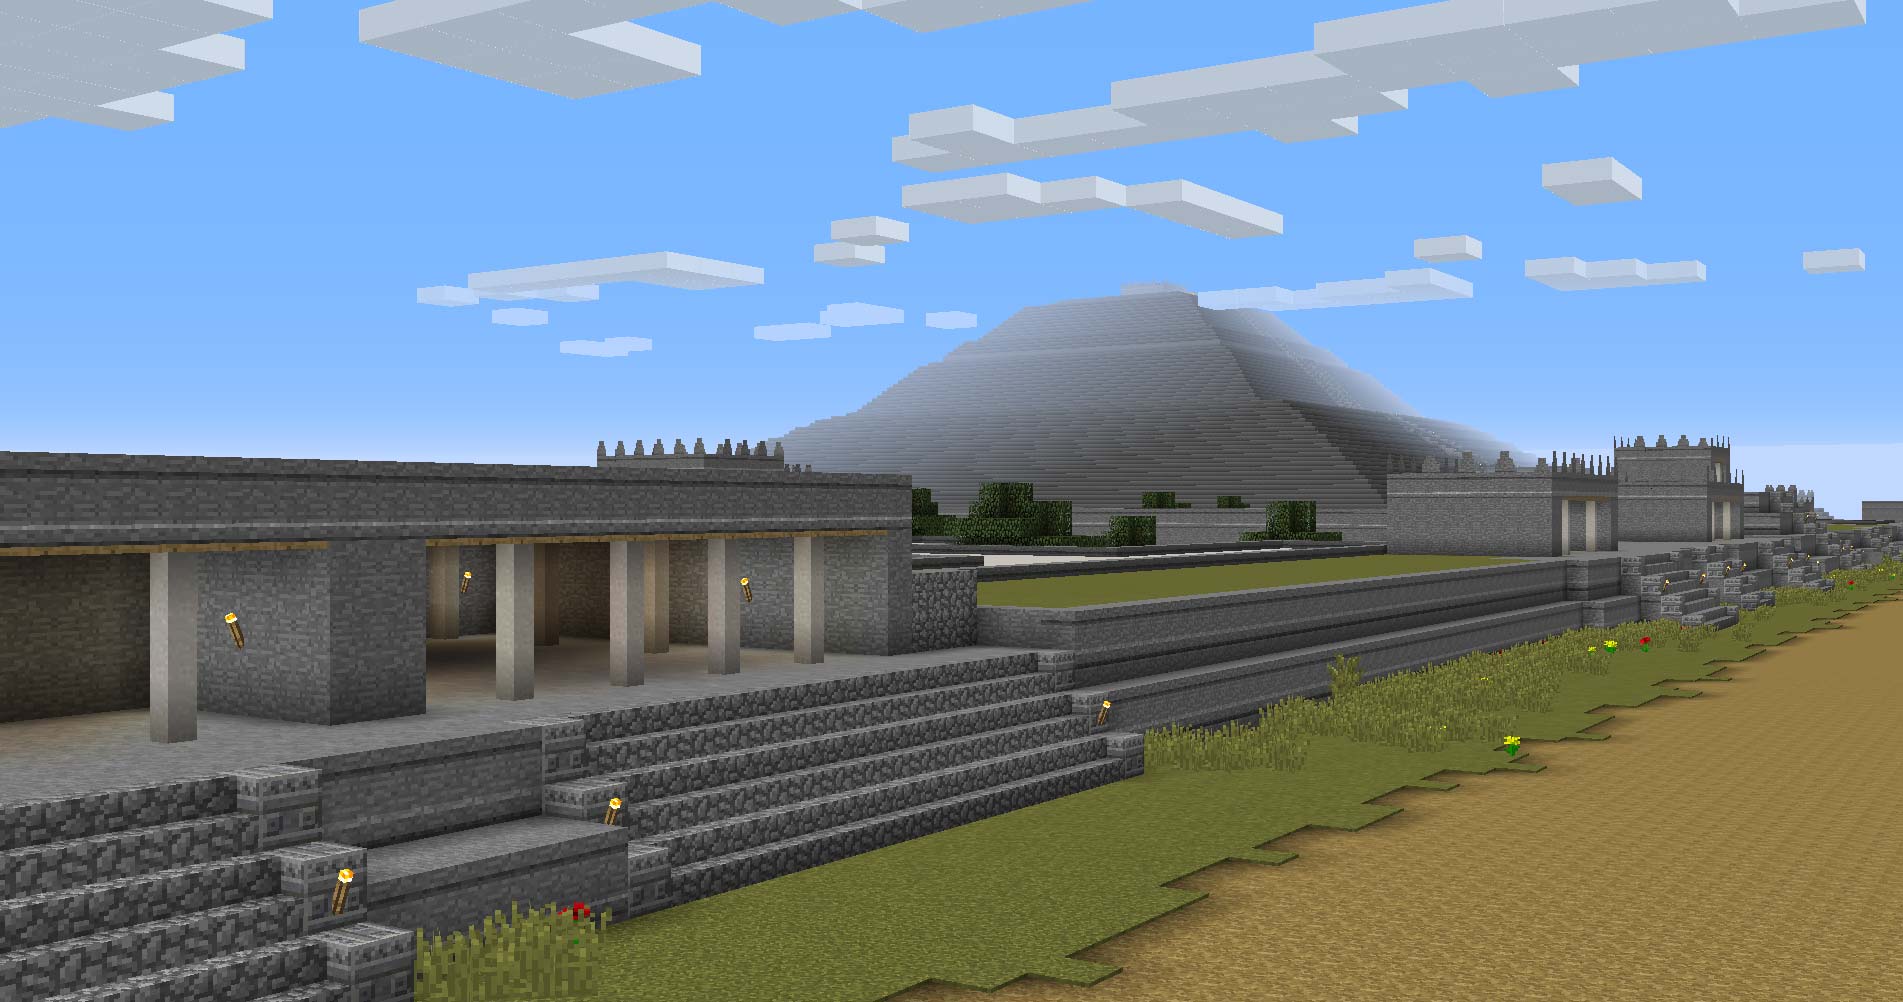 ancient temple minecraft